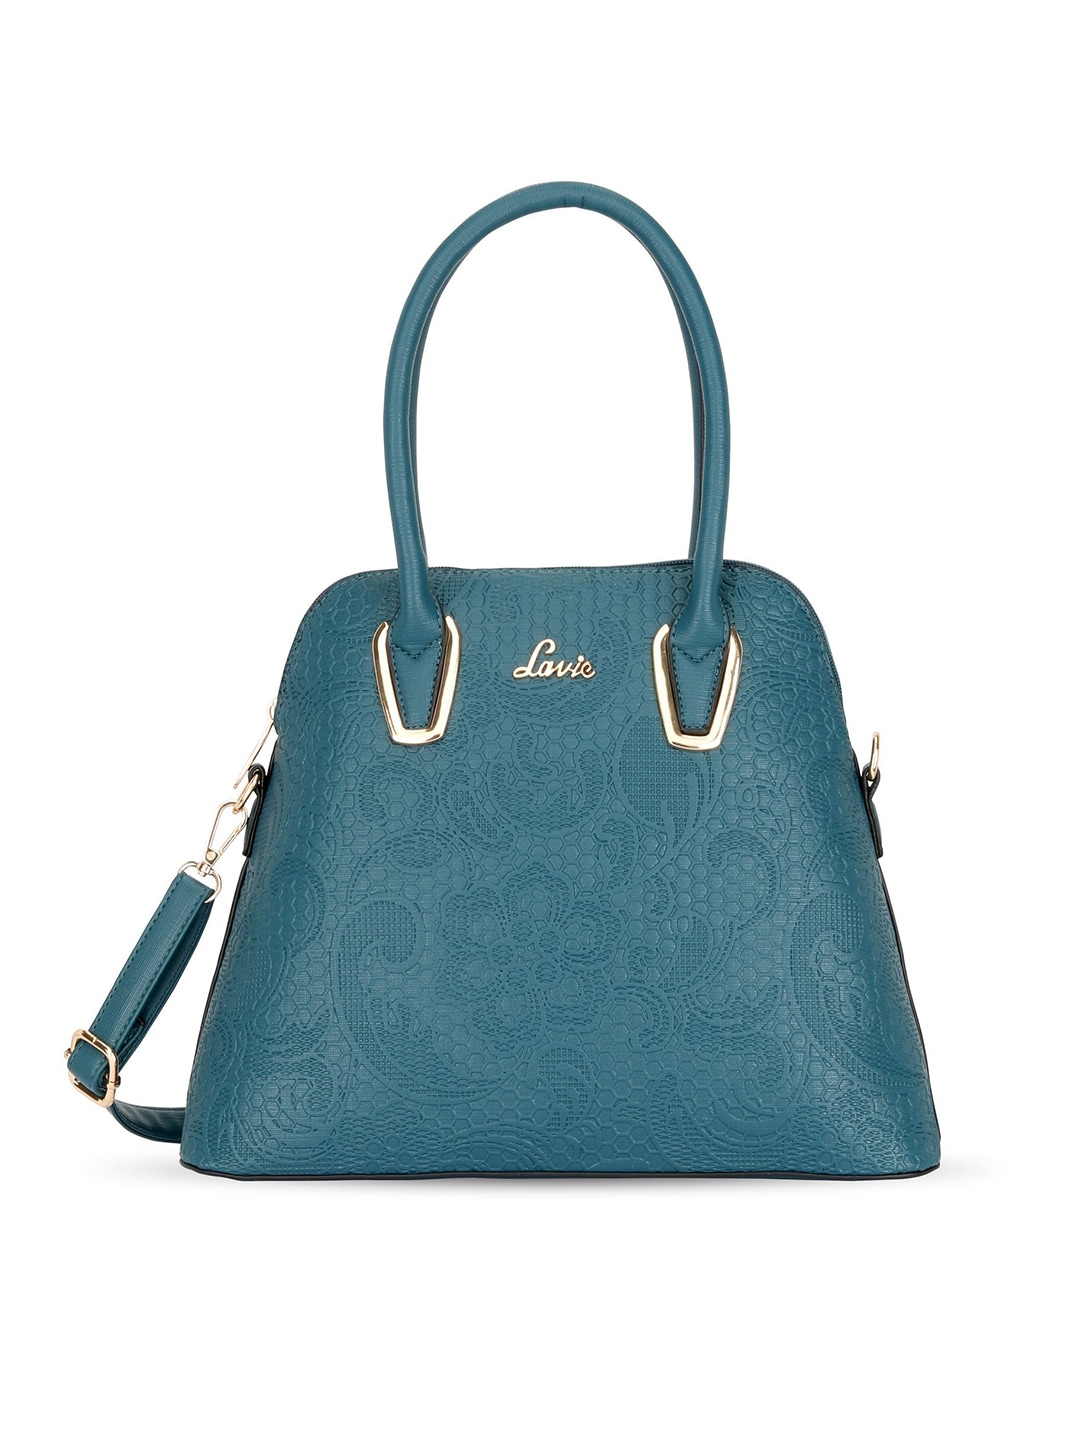 Lavie Blue Textured Shoulder Bag Price in India